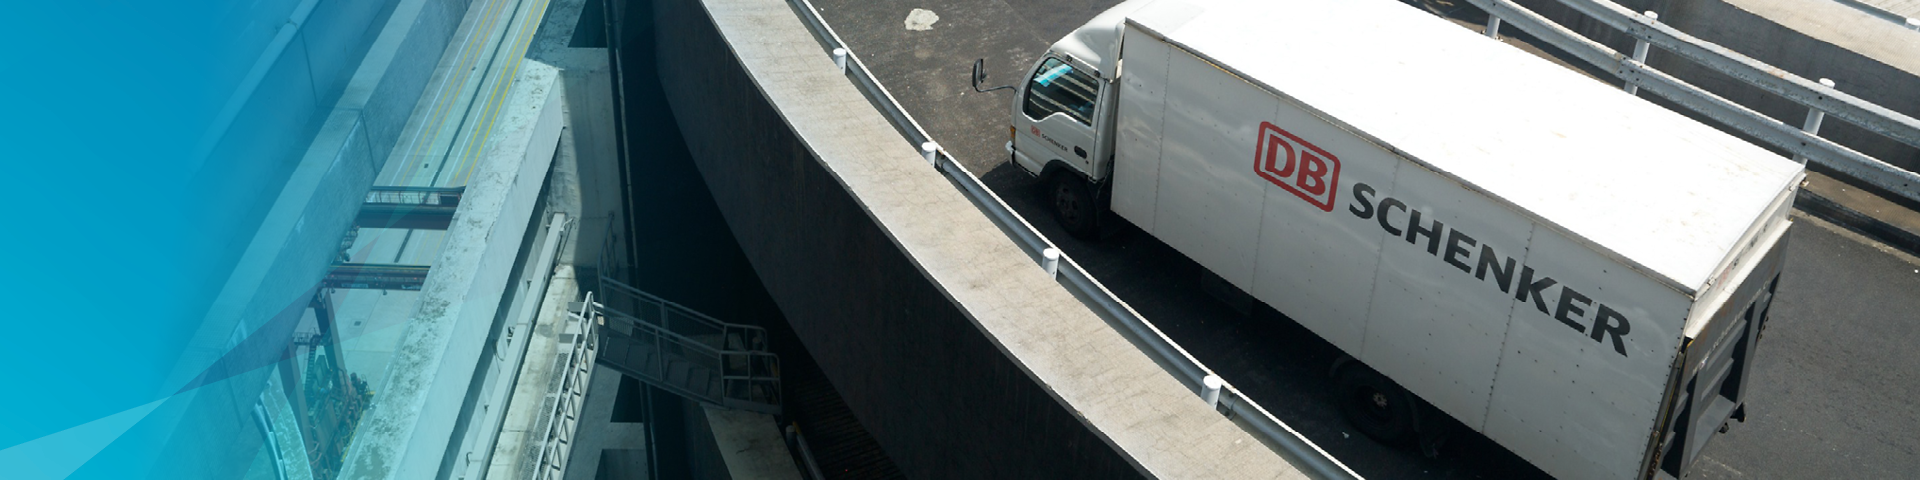 Freight Transport & Logistics